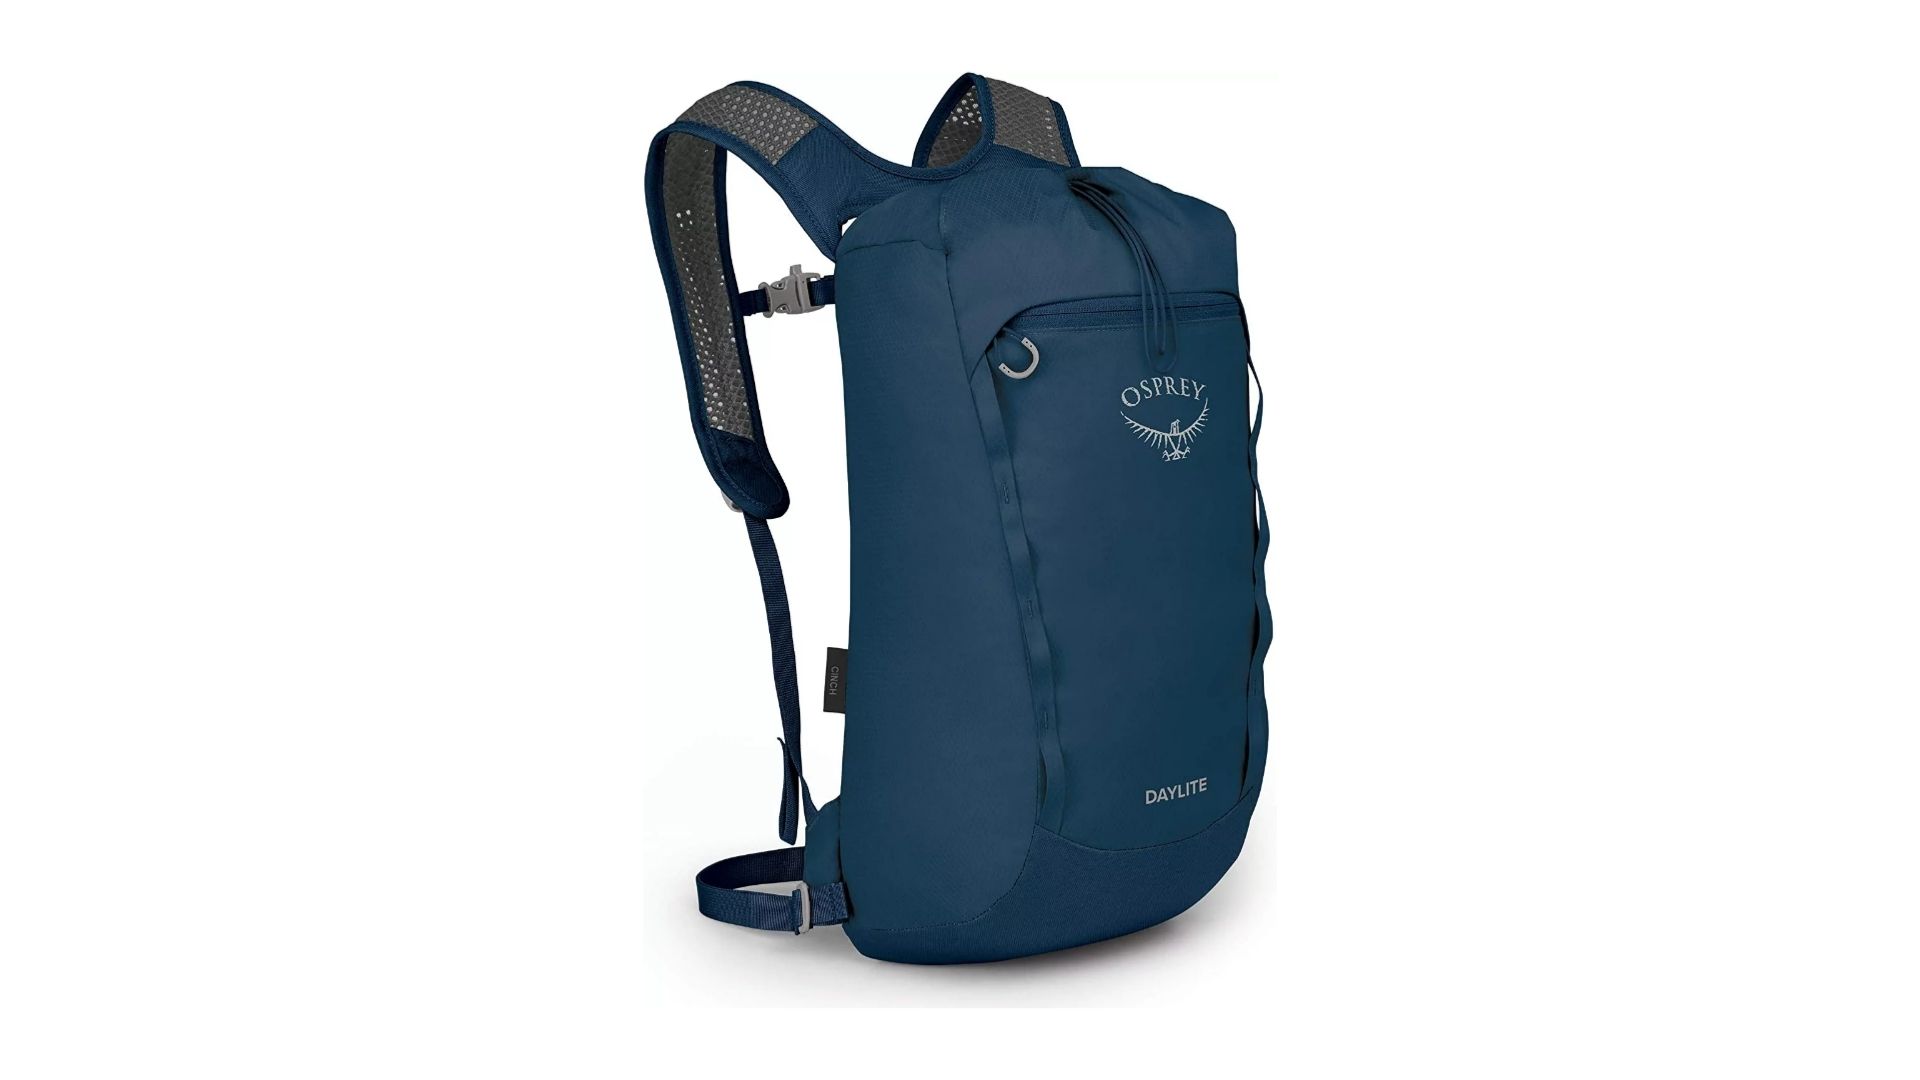 Trail Blazers Rip City Drawstring Cinch Backpack - Side Pocket